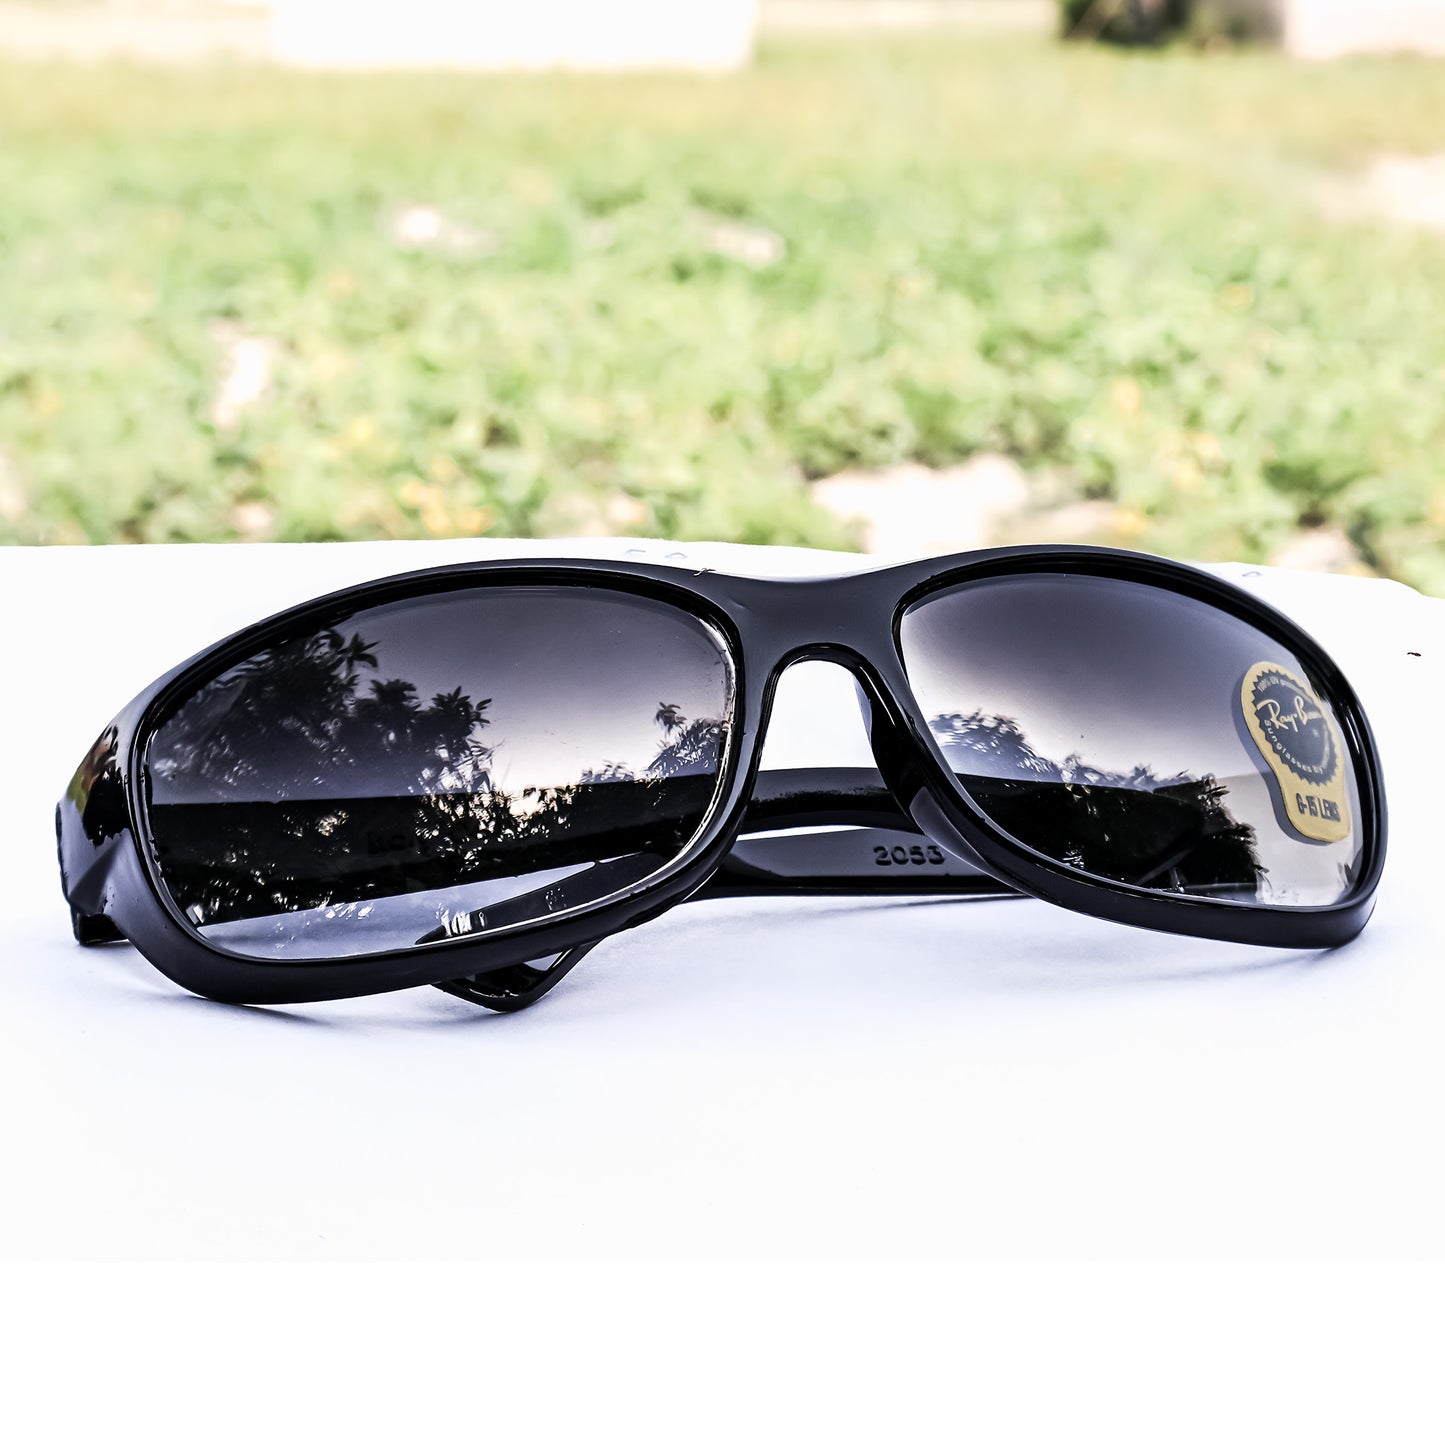 Jiebo 400% UV Protection Sports Sunglasses